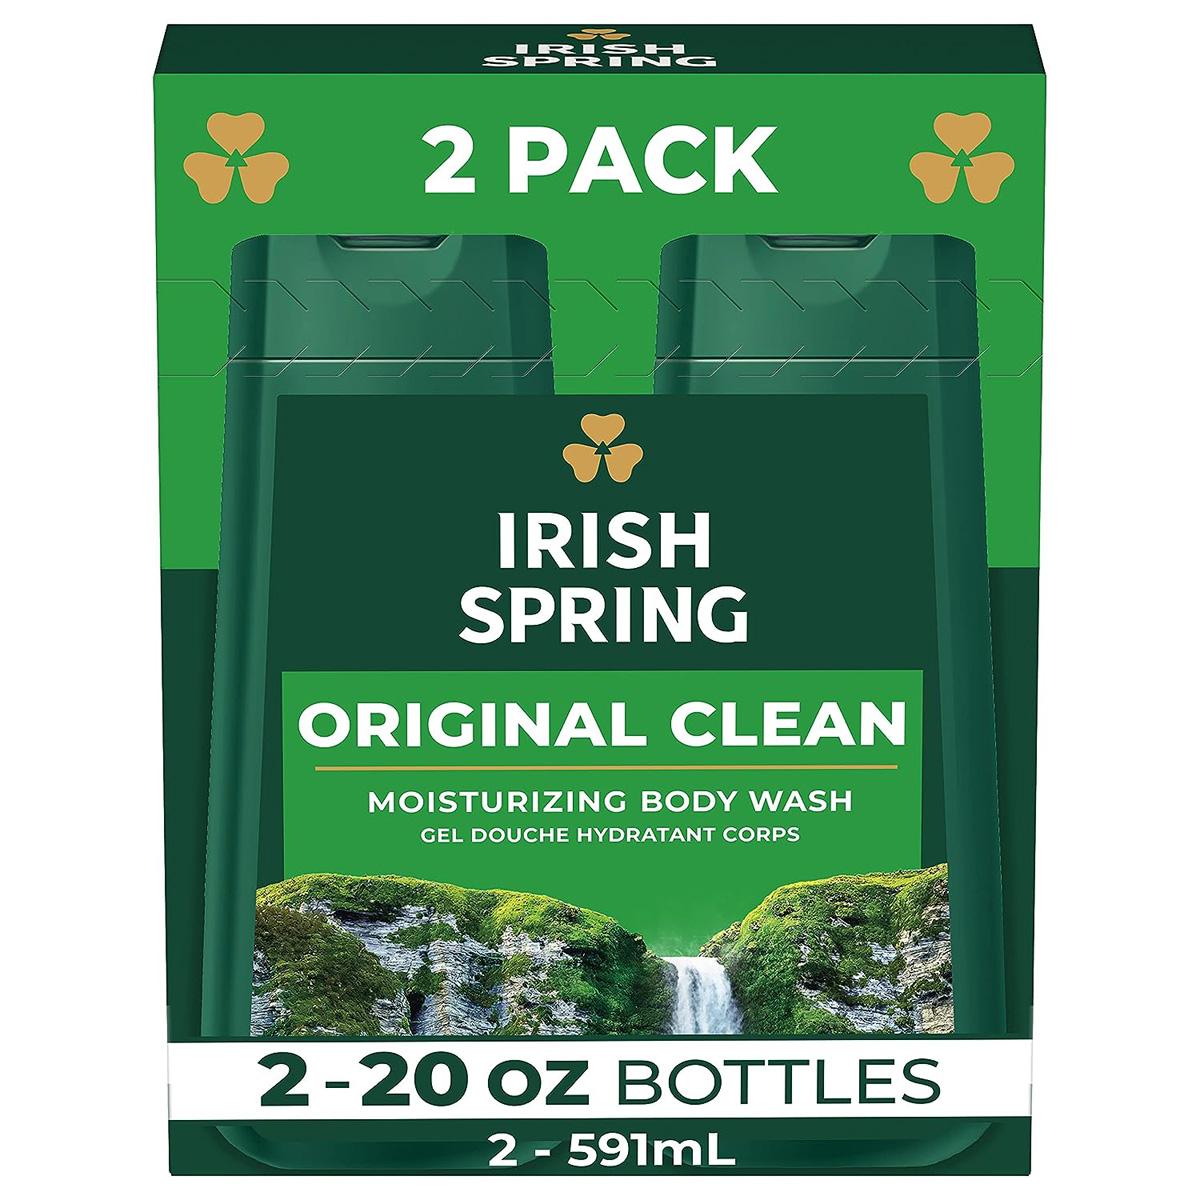 Irish Spring Original Clean Body Wash 2 Pack for $6.51